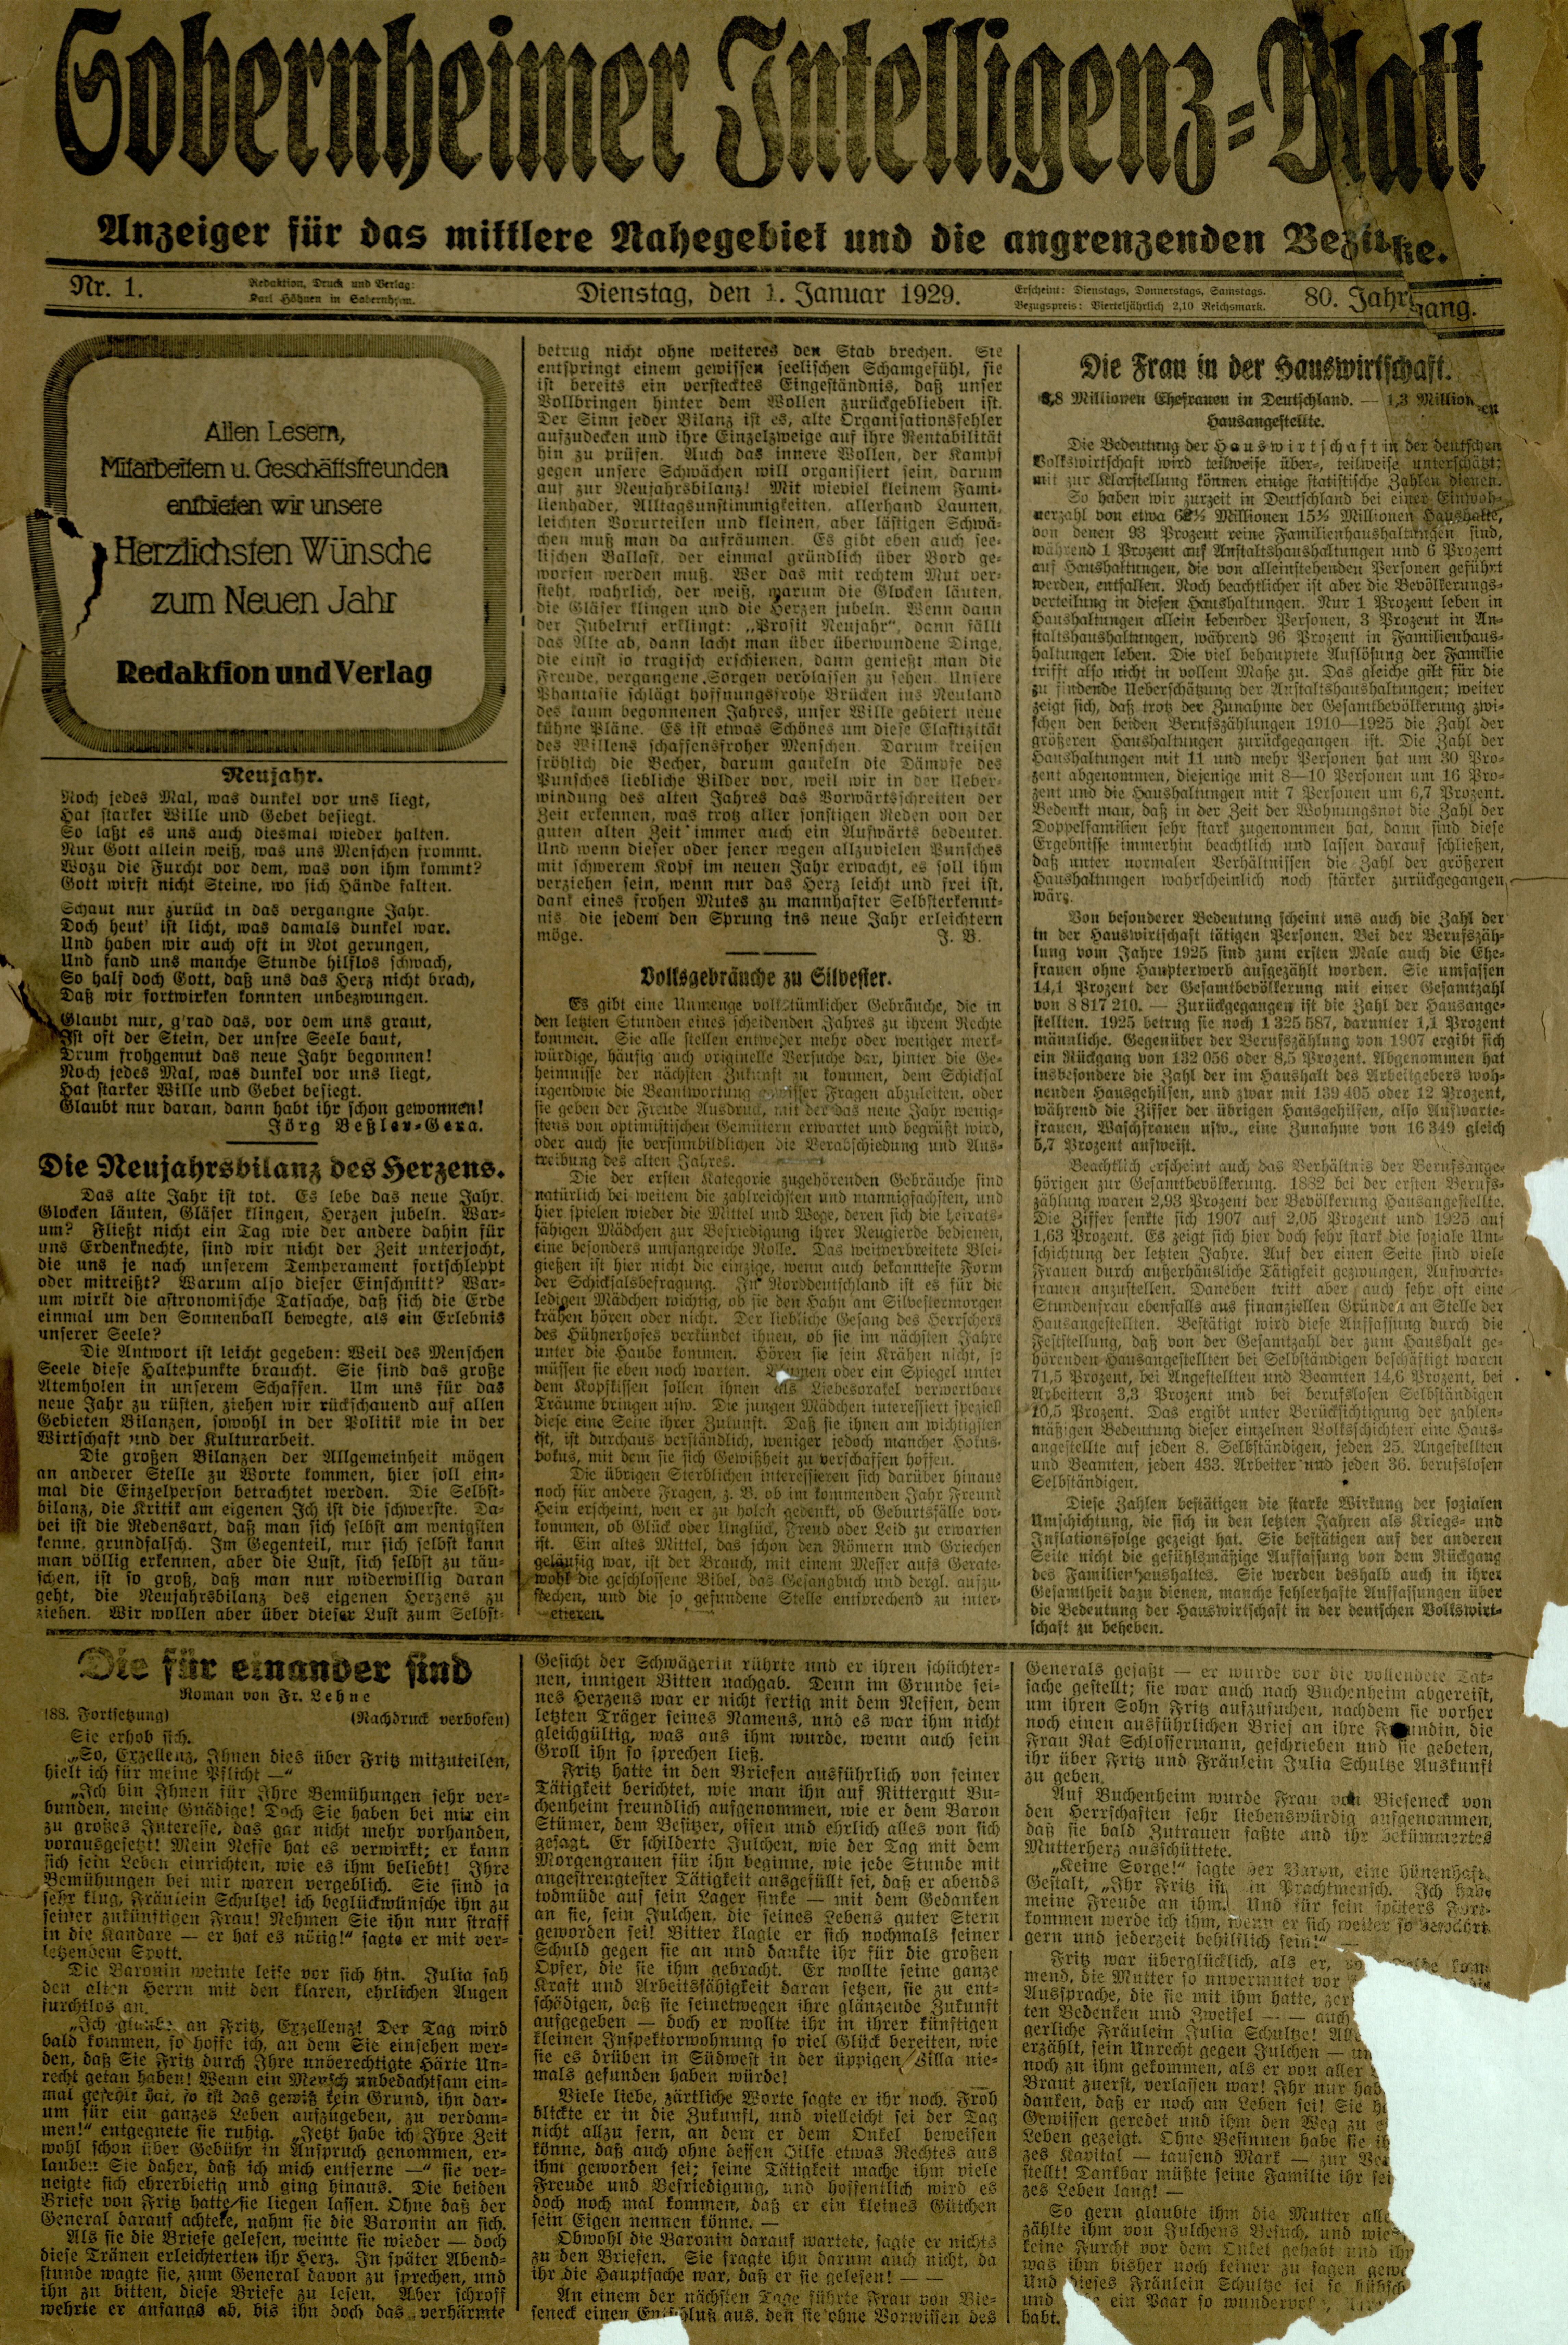 Zeitung: Sobernheimer Intelligenzblatt; Januar 1929, Jg. 80 Nr. 1 (Heimatmuseum Bad Sobernheim CC BY-NC-SA)